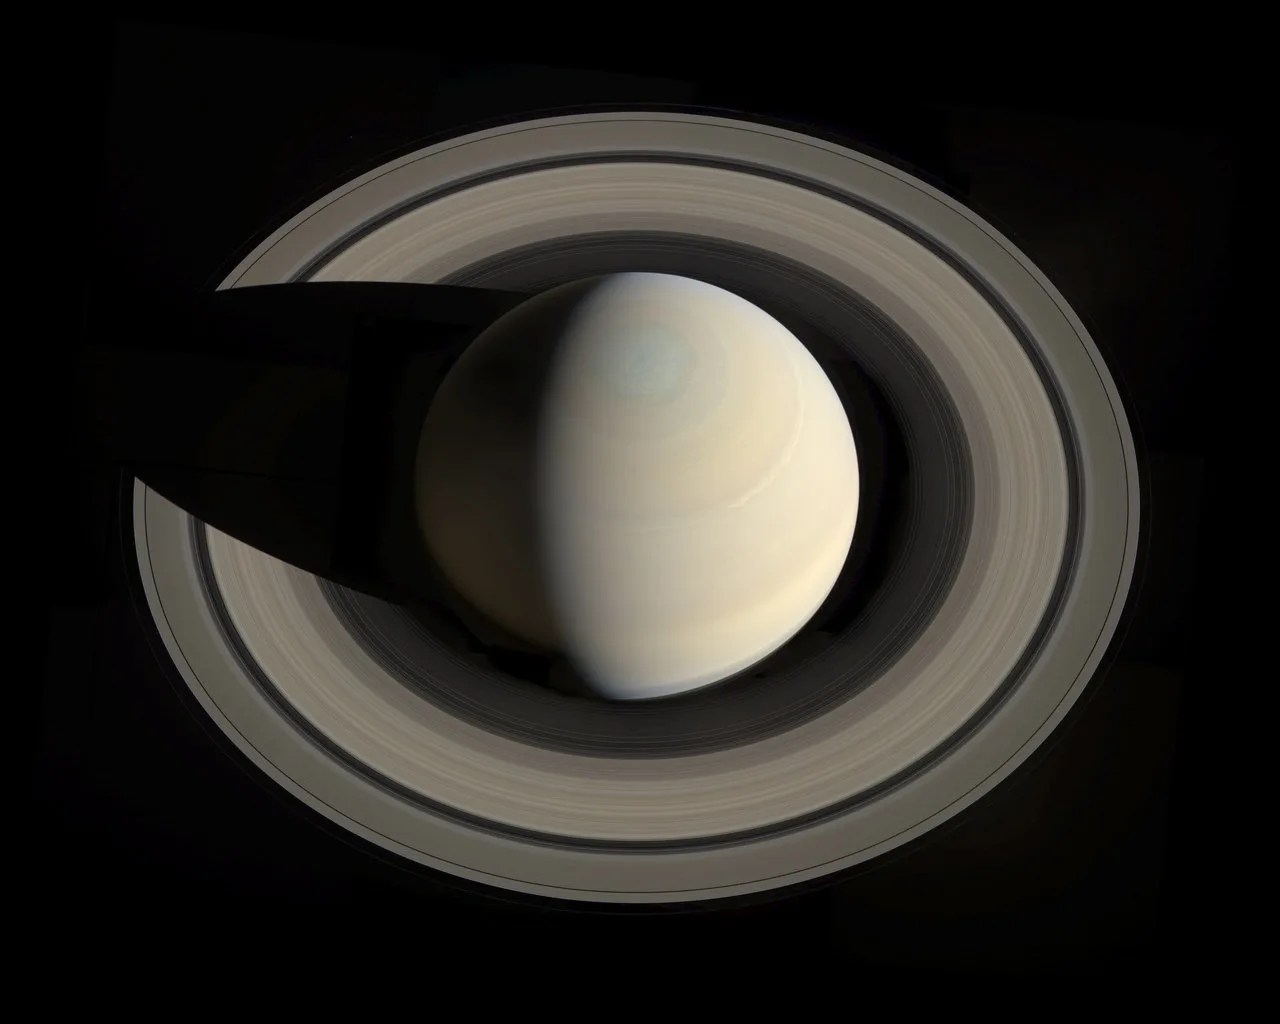 3D magnet aerospace & solar system – Saturn, celestial body, planet, rings  | eBay